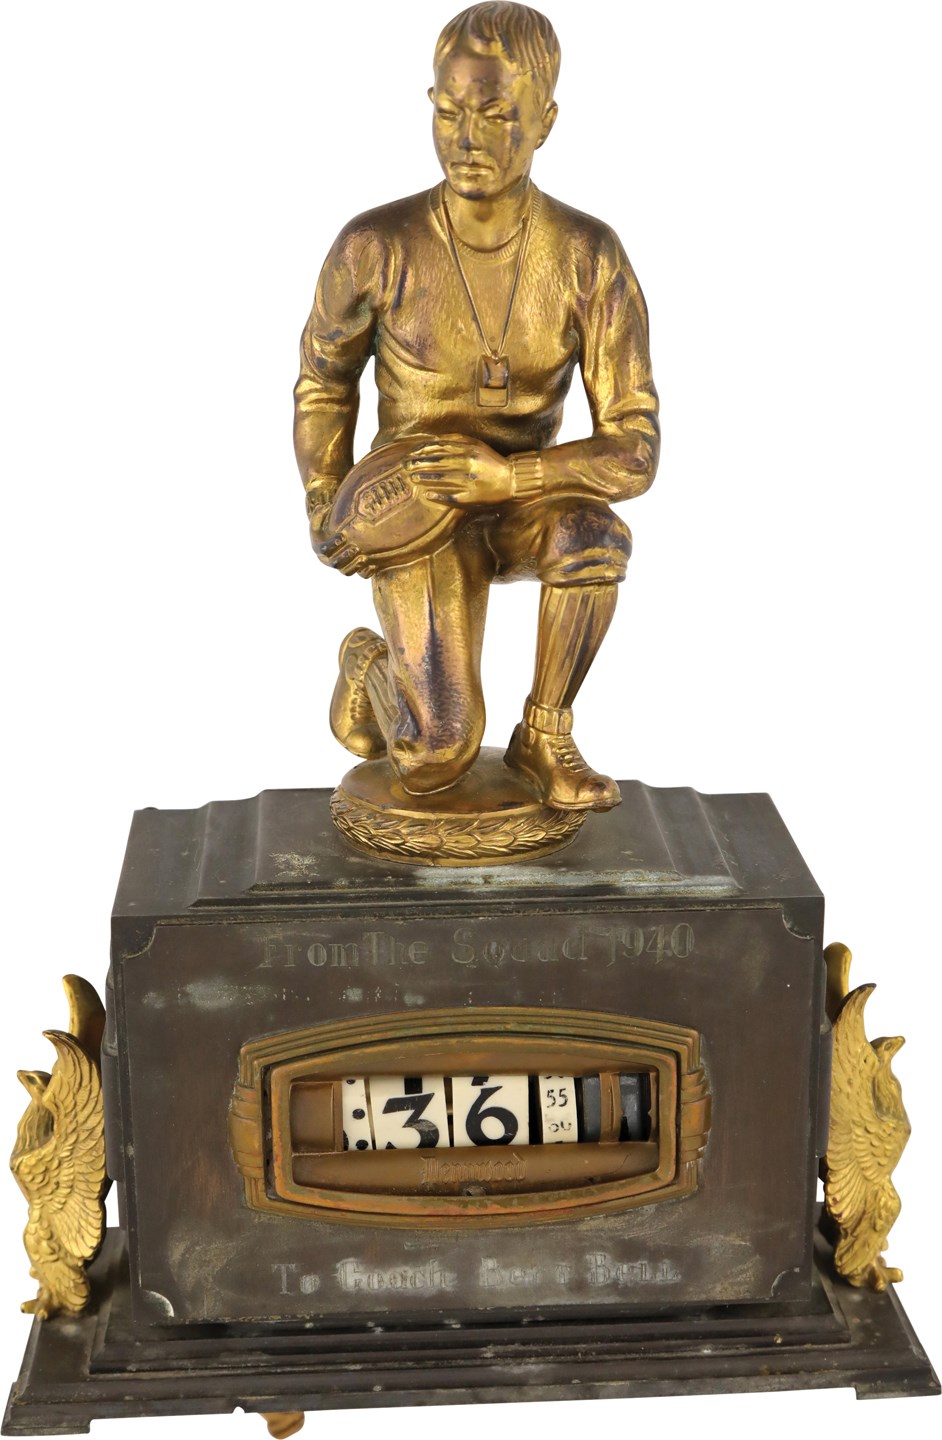 1940 Presentational Clock Award Presented to Bert Bell